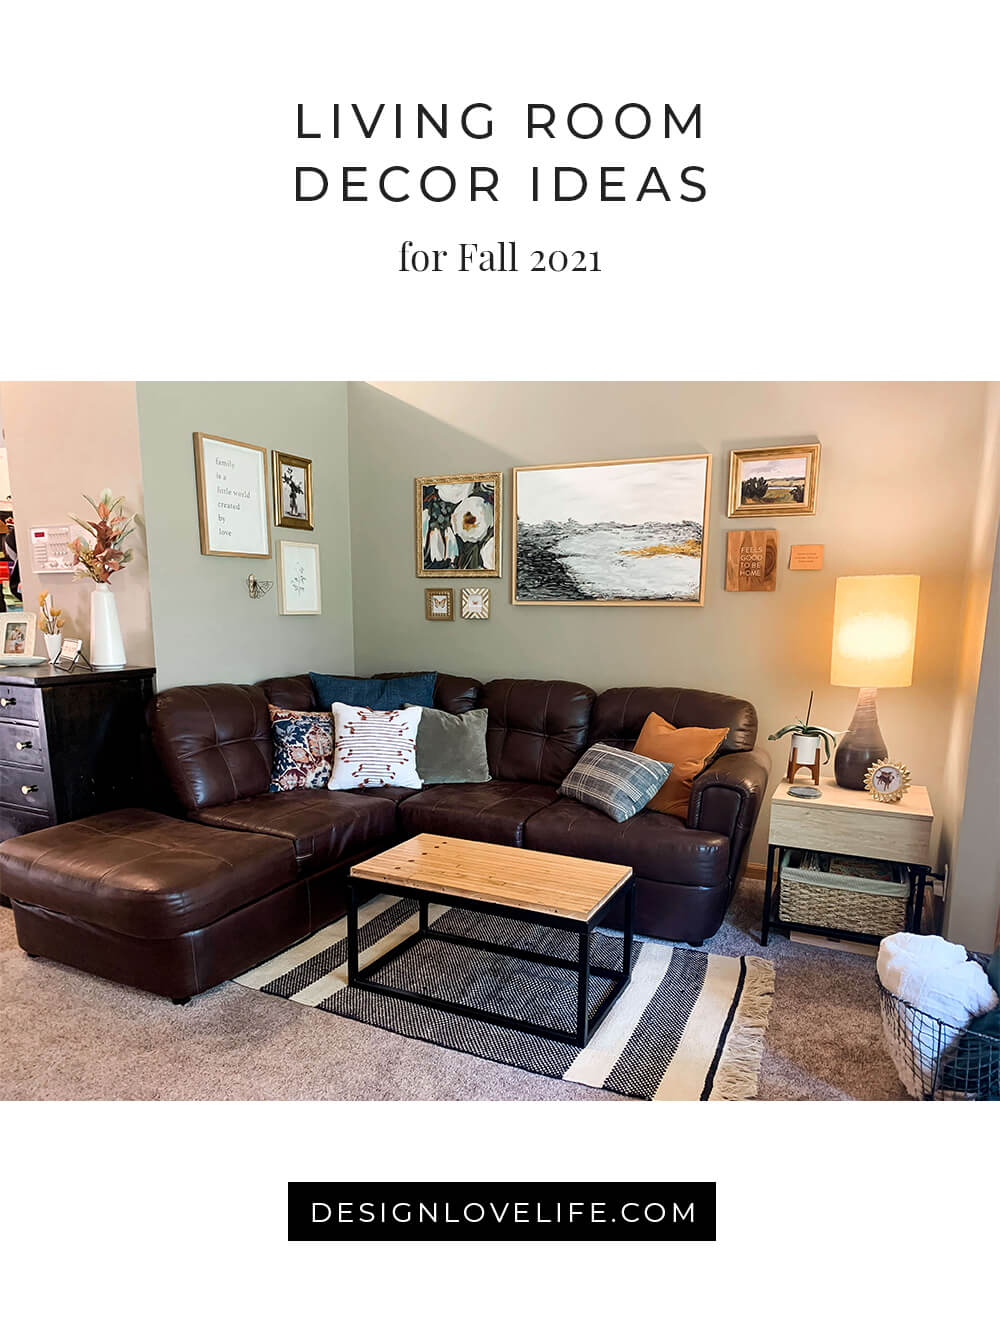 Living Room Decor Ideas - Wall Decor Edition. Lift Spirits and Brighten your Walls. Annie Johnson…</p>
		<p><a href=